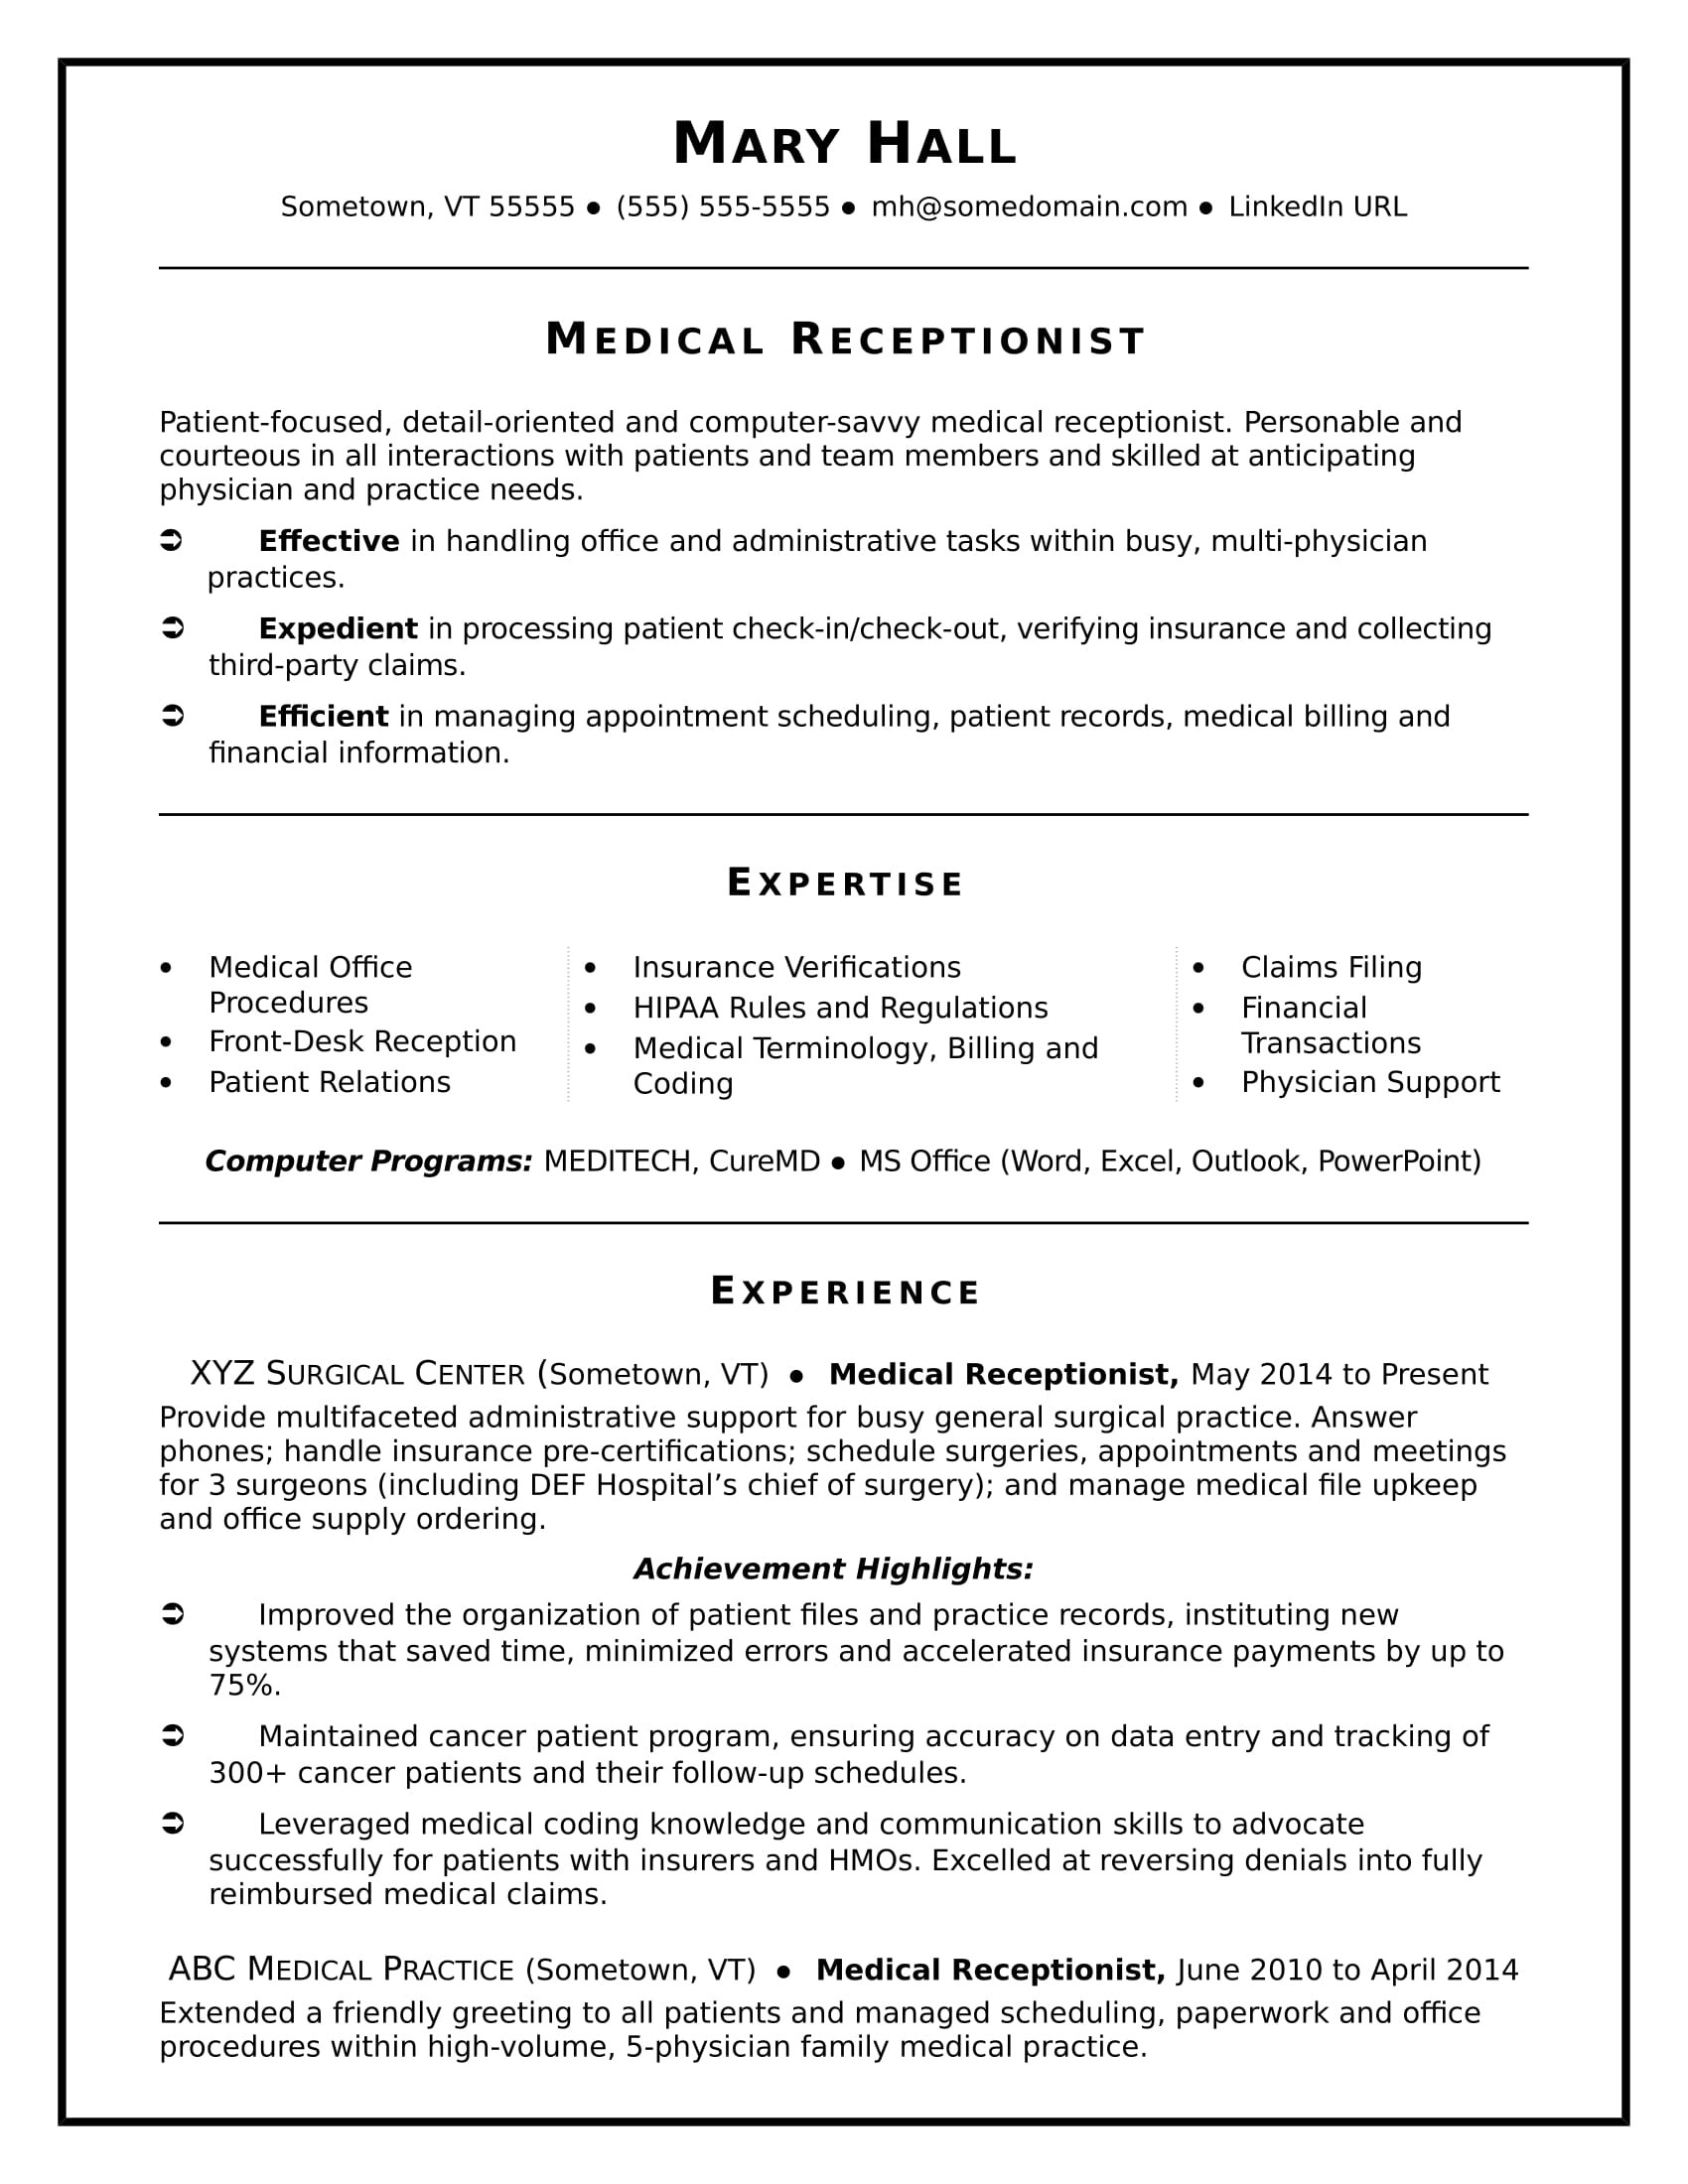 Sample Medical Resume Administrative In Surgical Services Medical Receptionist Resume Sample Monster.com